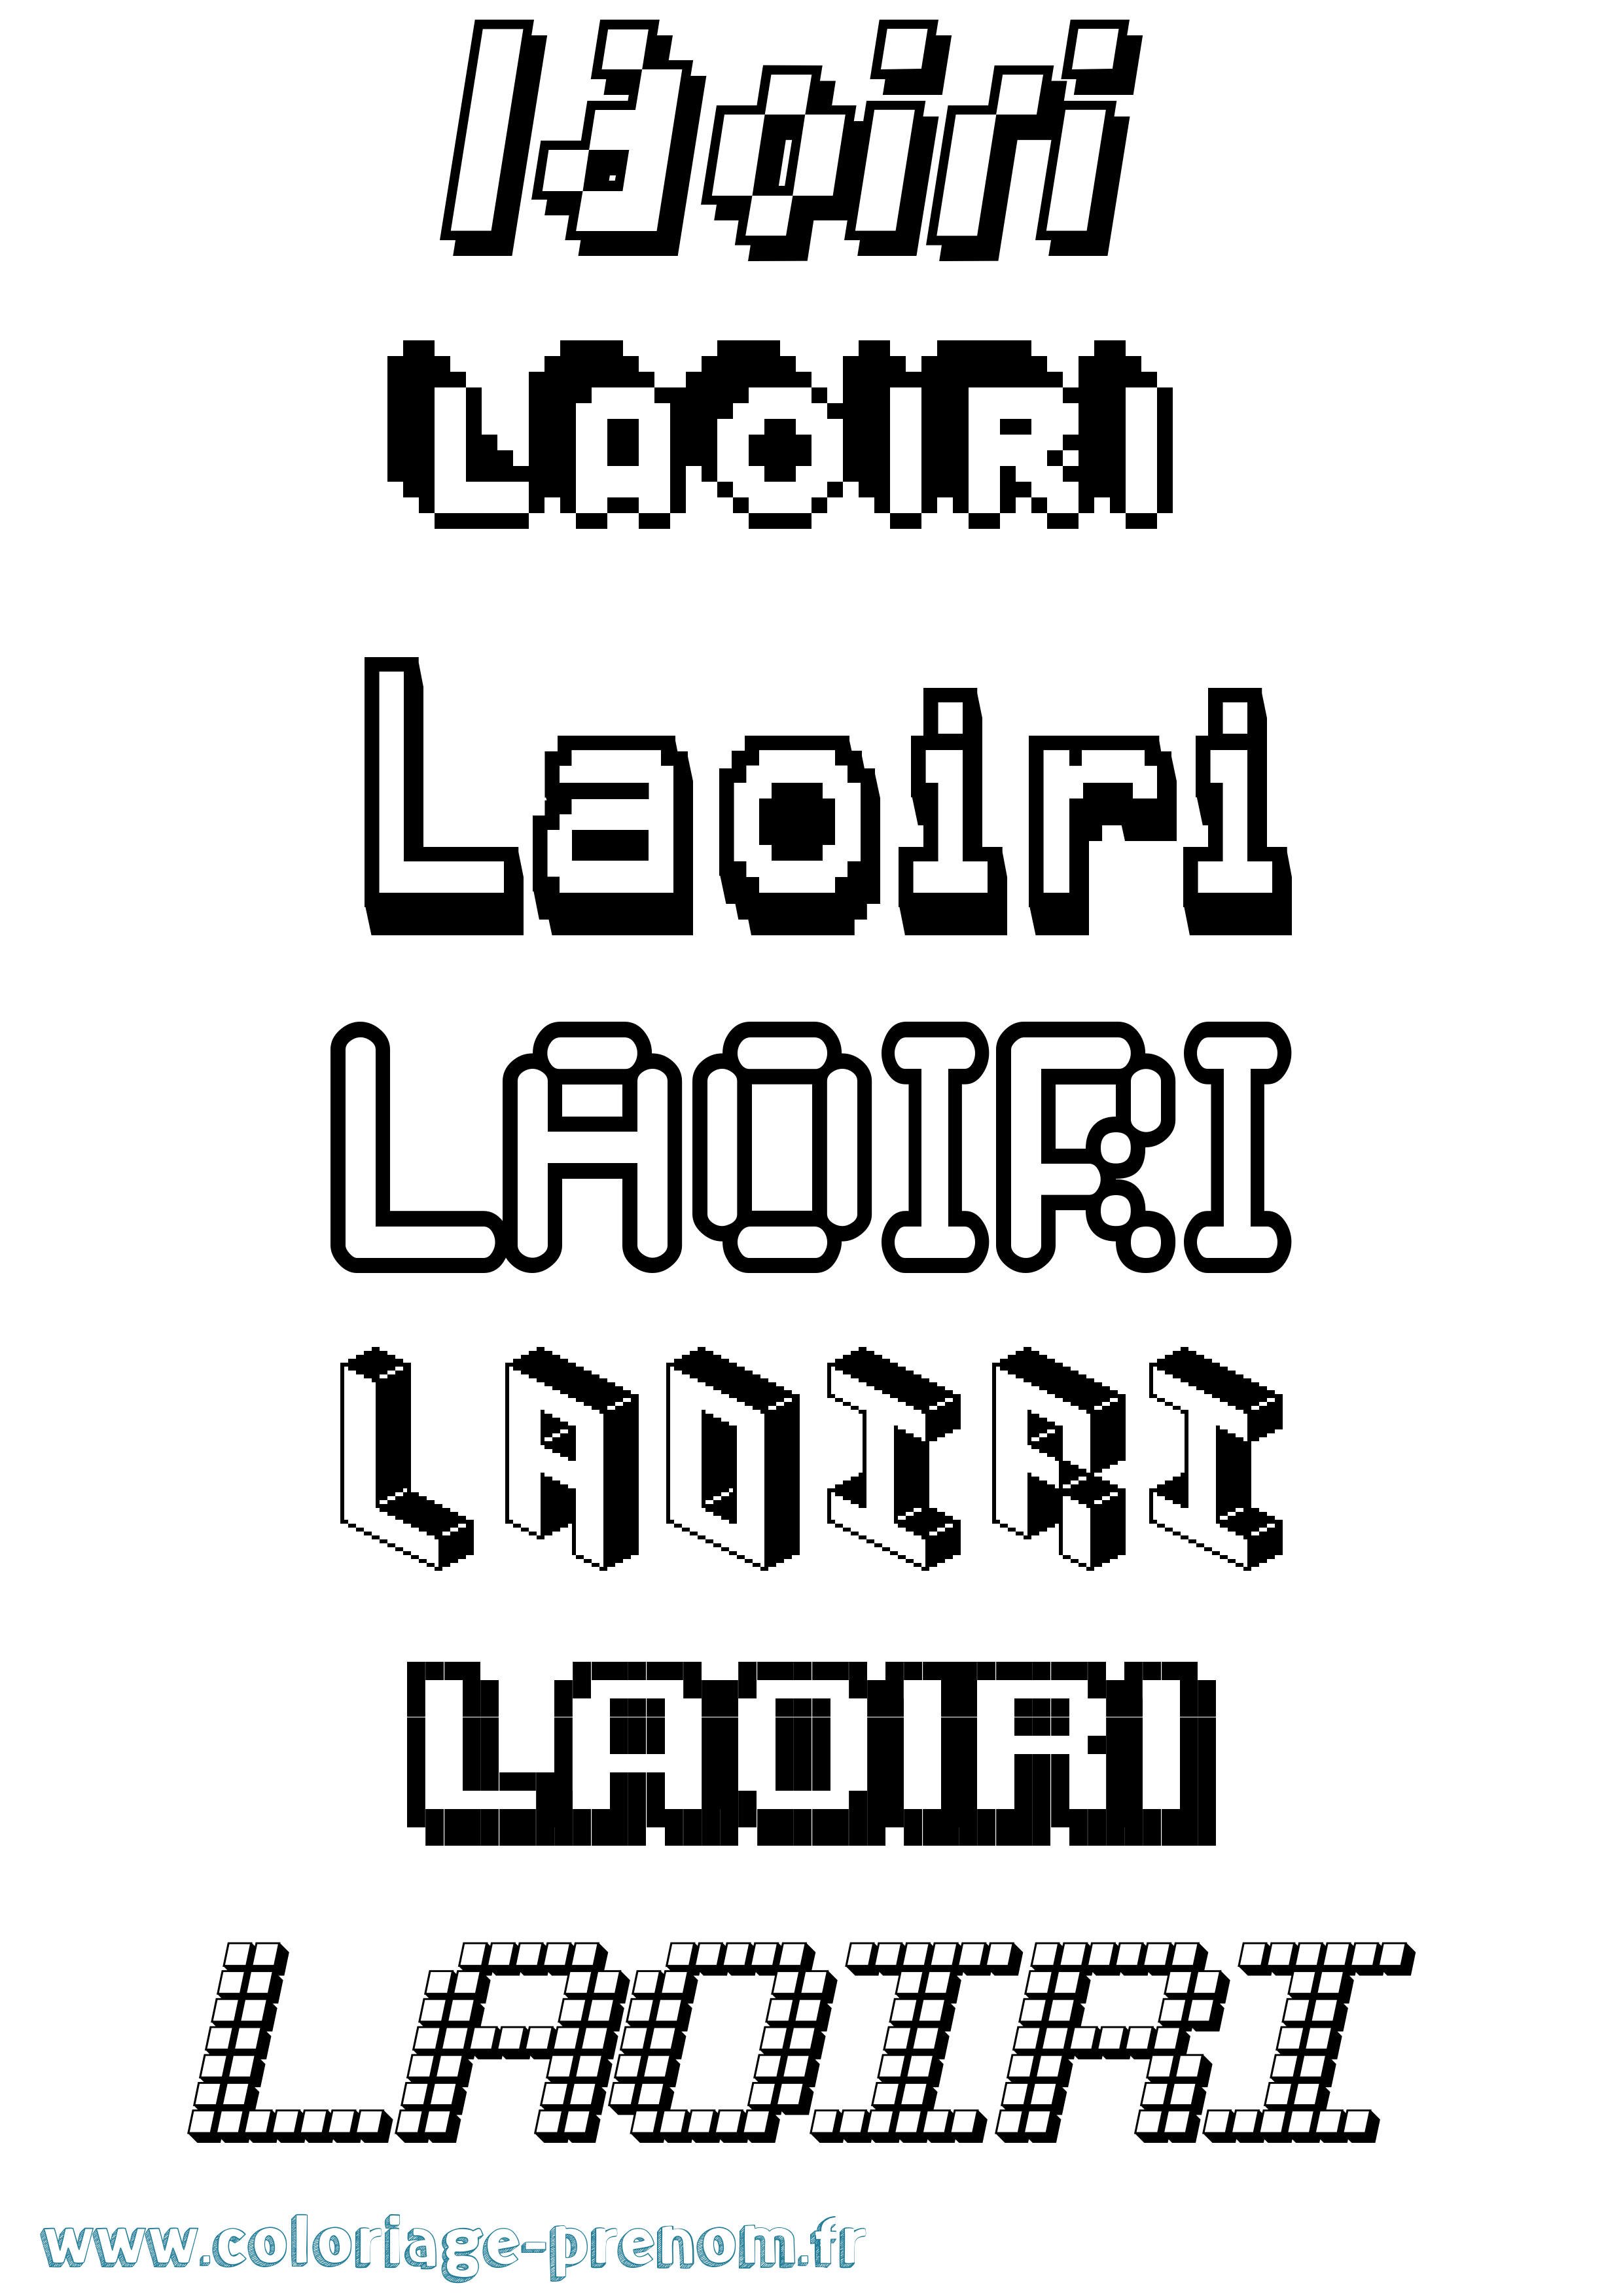 Coloriage prénom Laoiri Pixel